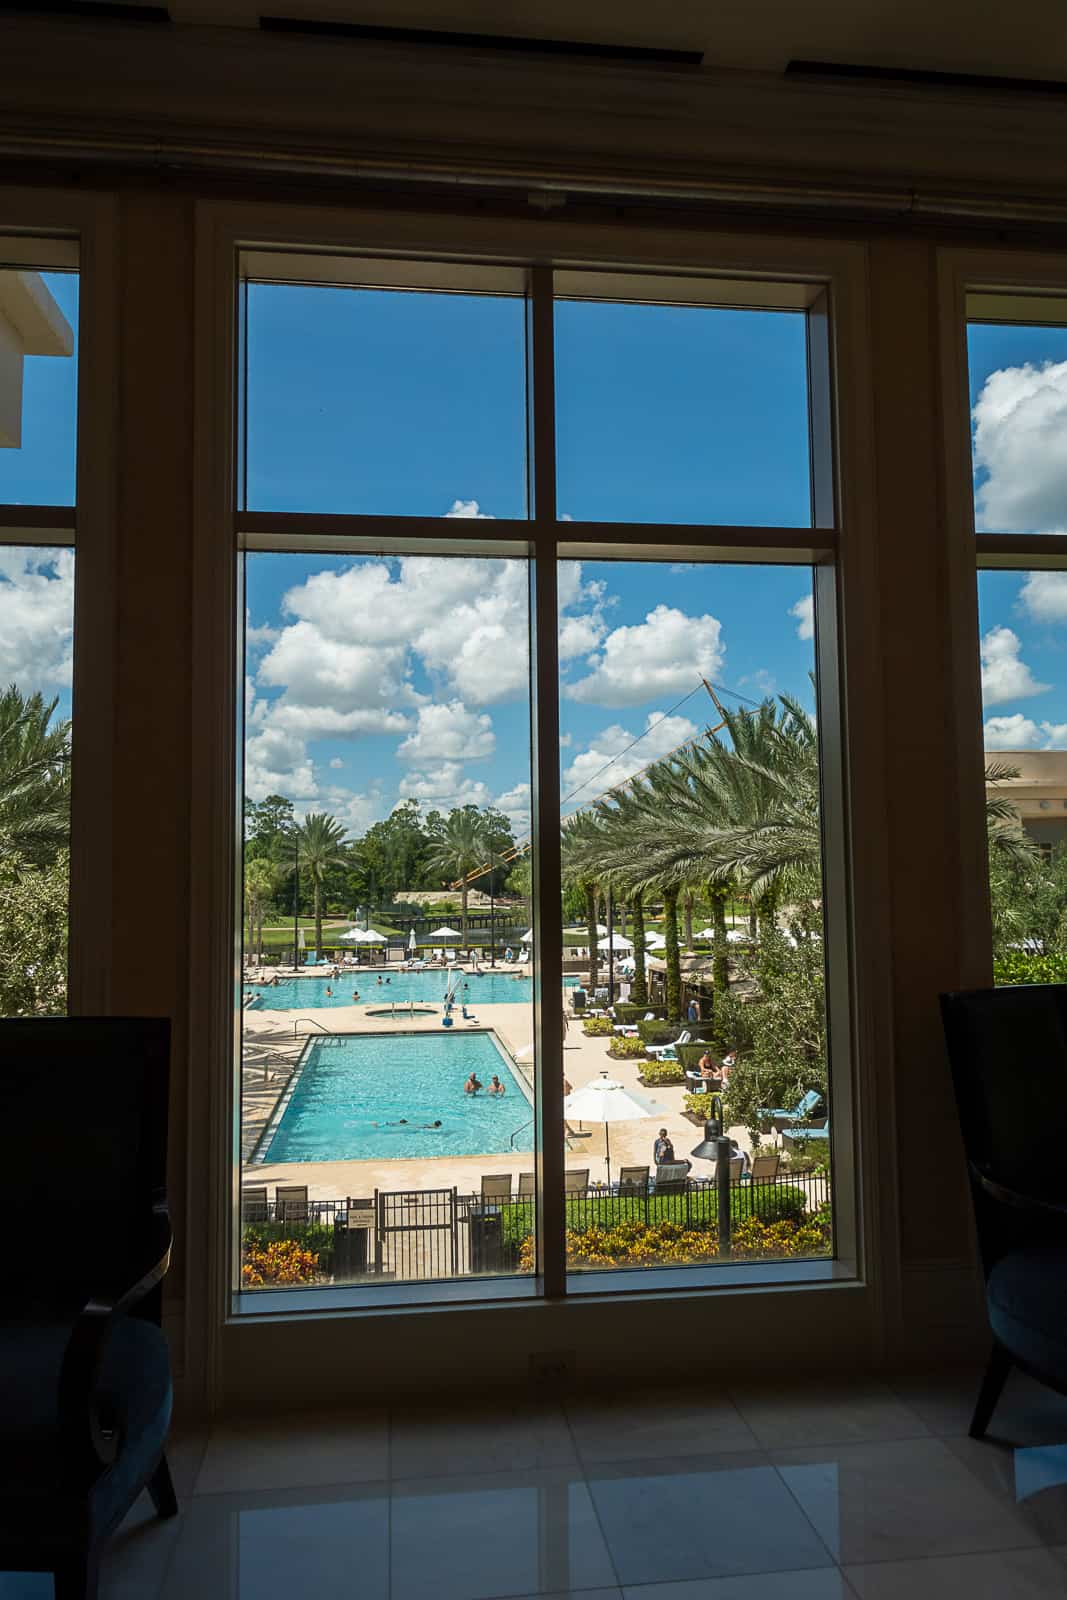 Lobby Pool View at Waldorf Astoria Orlando Disney World Offsite Property